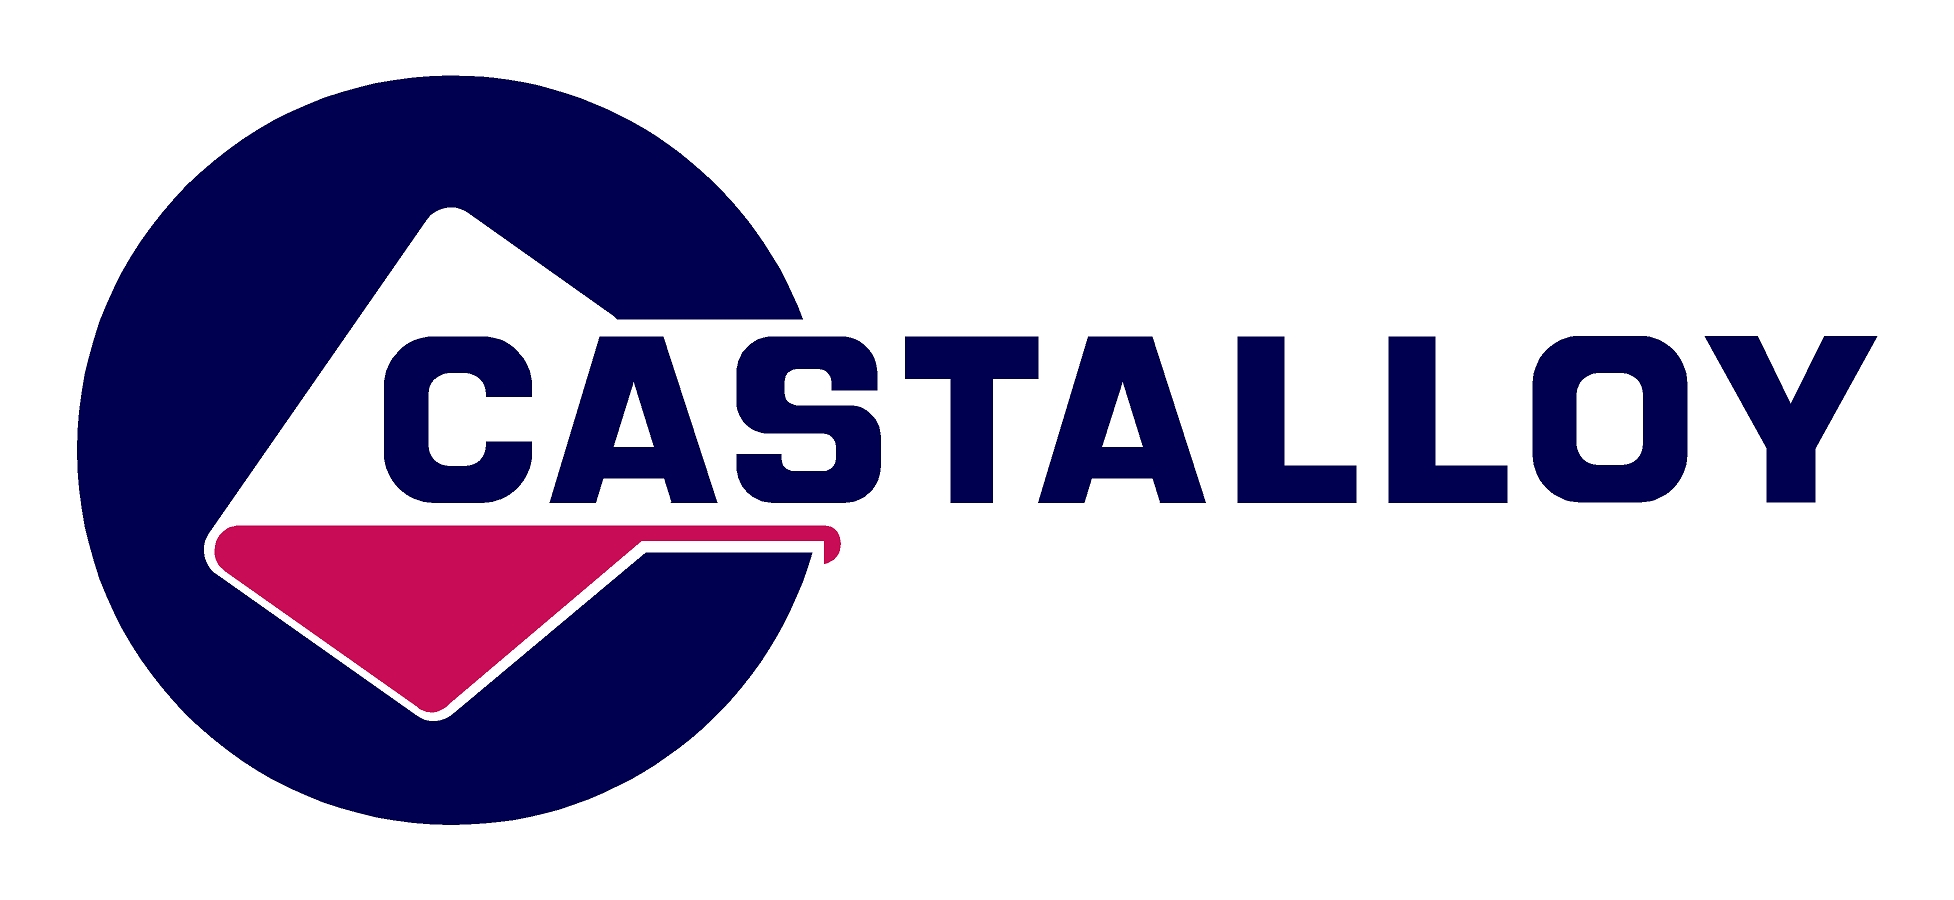 Castalloy Europe Limited